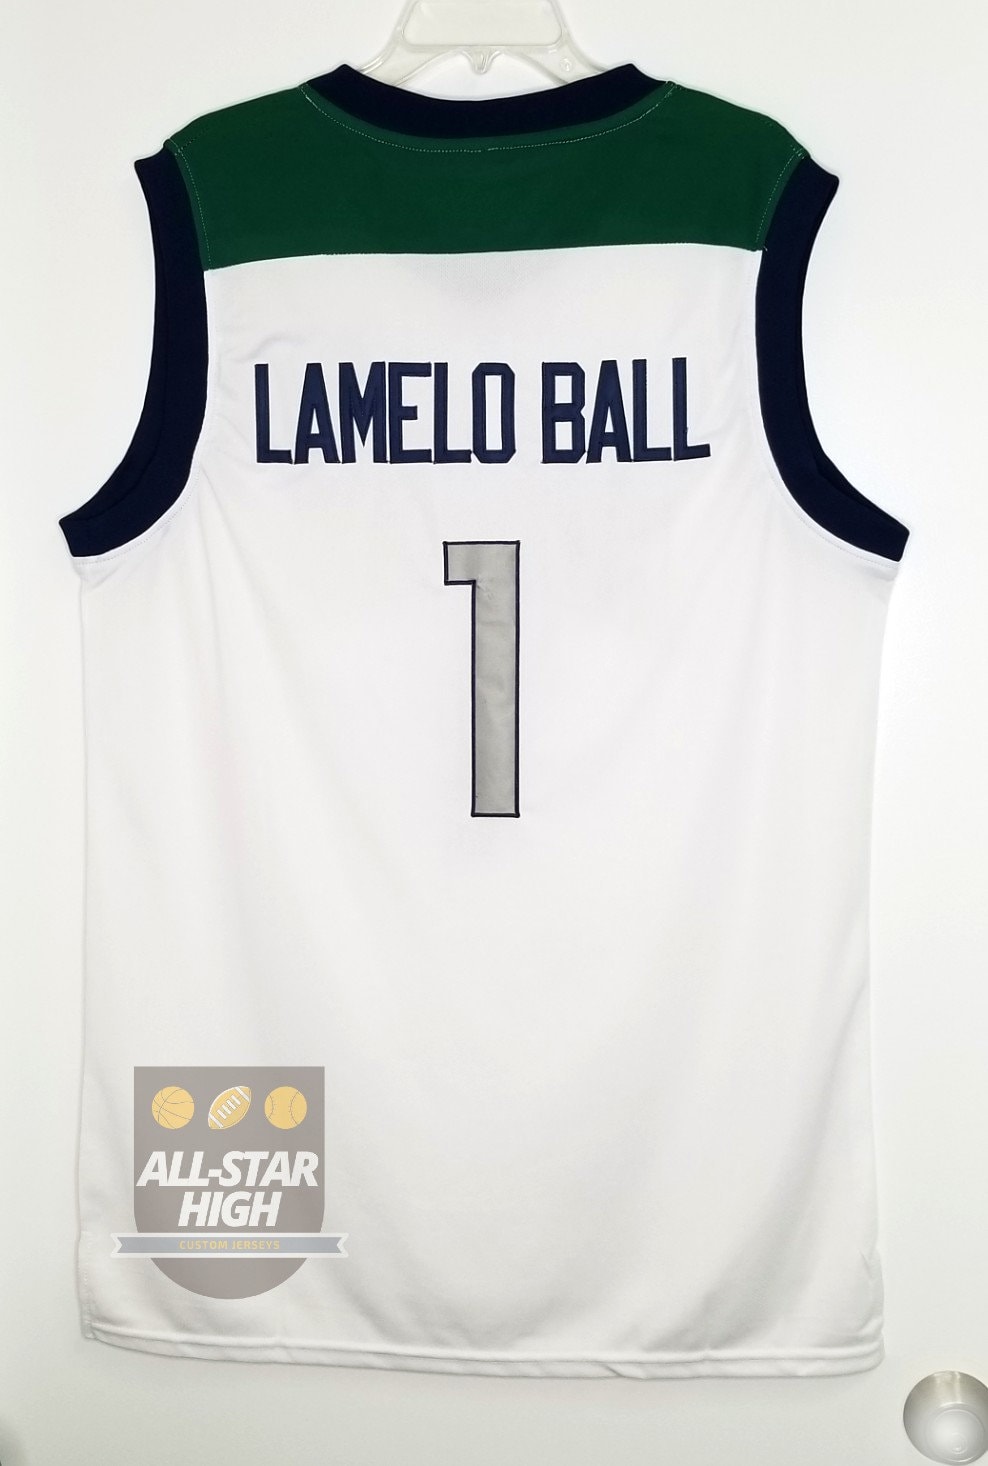 Retro Lamelo Ball 1 Los Angeles Basketball Jerseys Printed LA